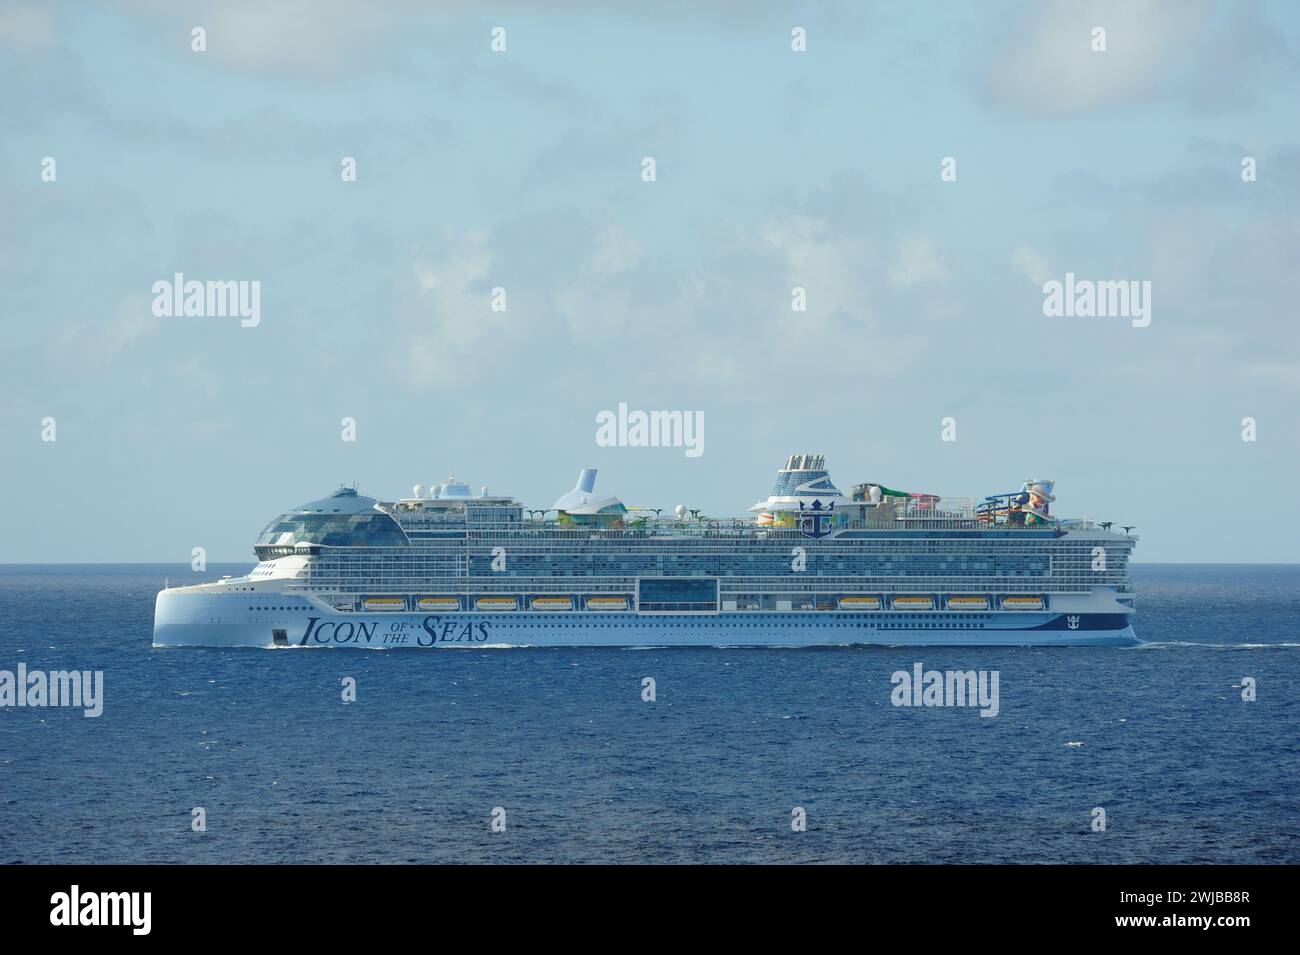 Caribbean Sea, Nassu - 28th Jan 2024:Icon of the Seas on her maiden voyage Stock Photo